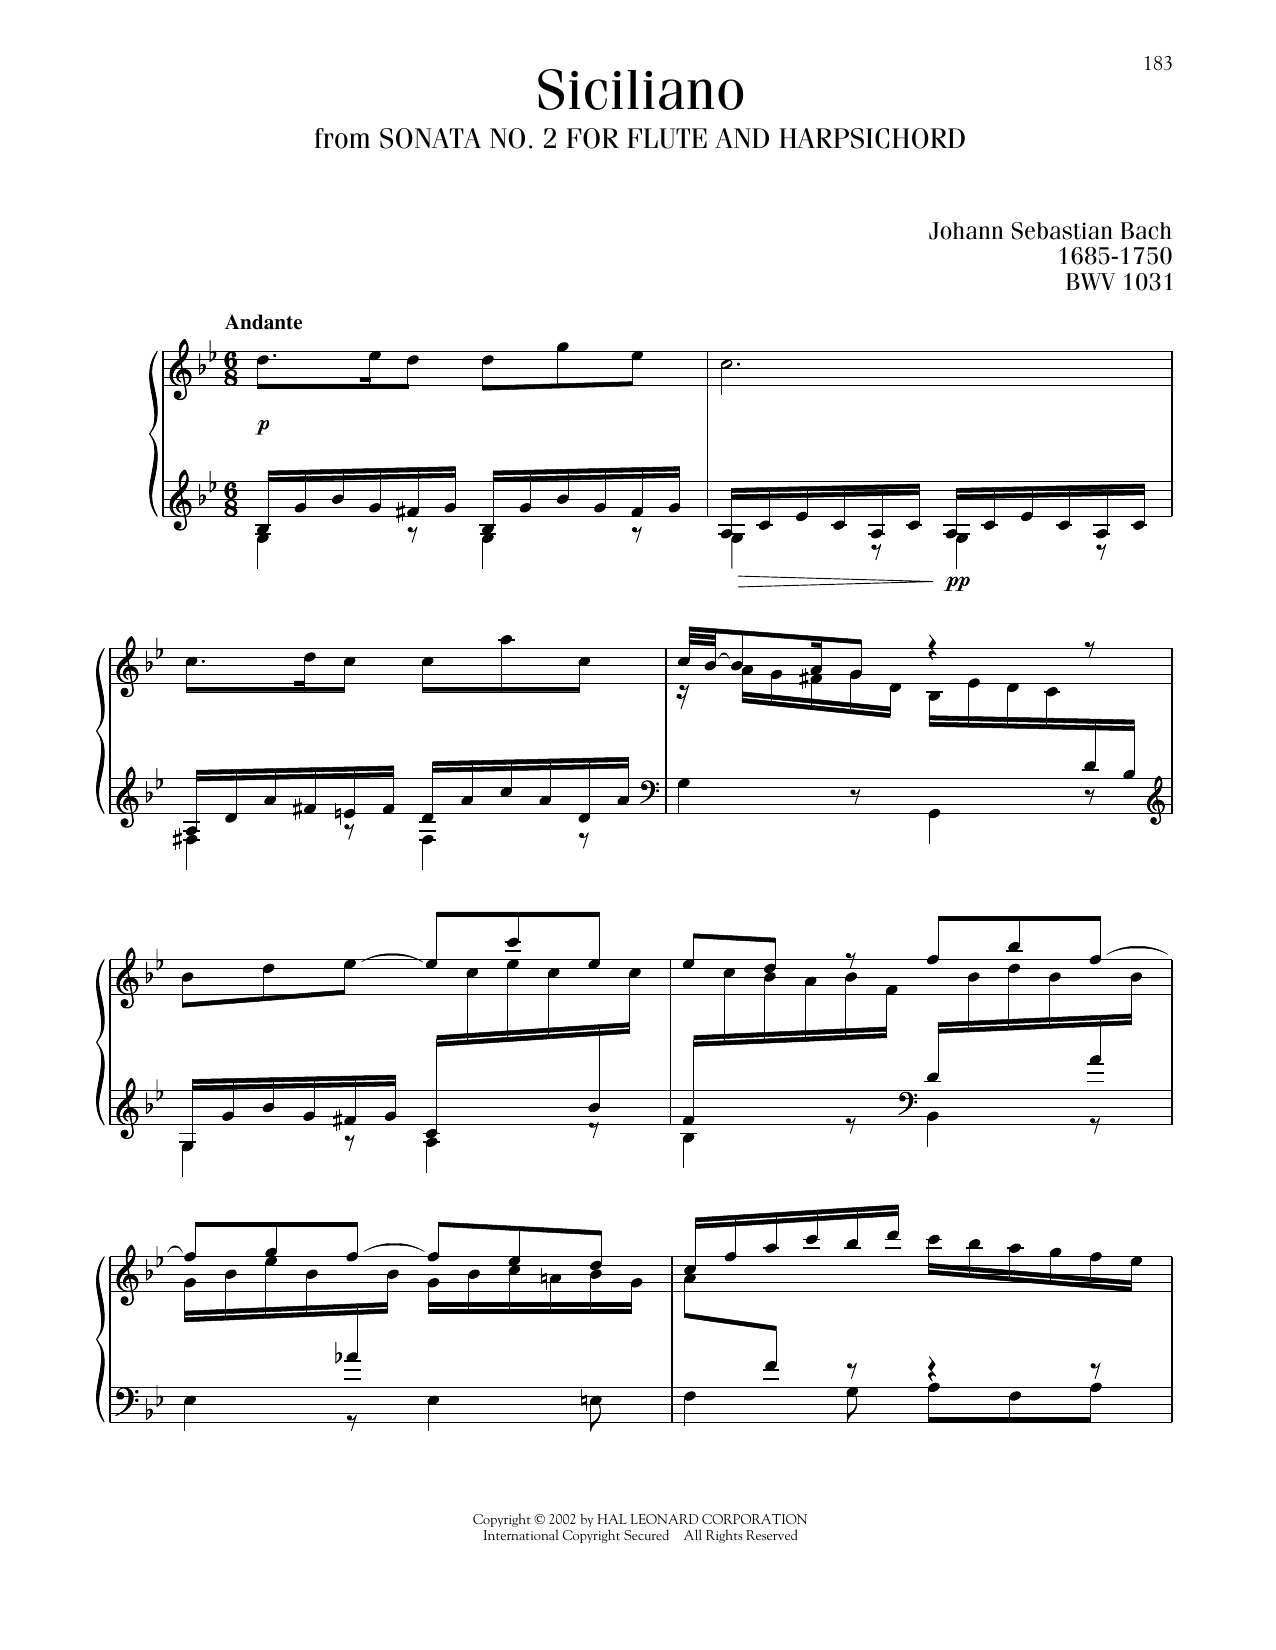 Johann Sebastian Bach Siciliano, BWV 1031 sheet music notes and chords arranged for Piano Solo